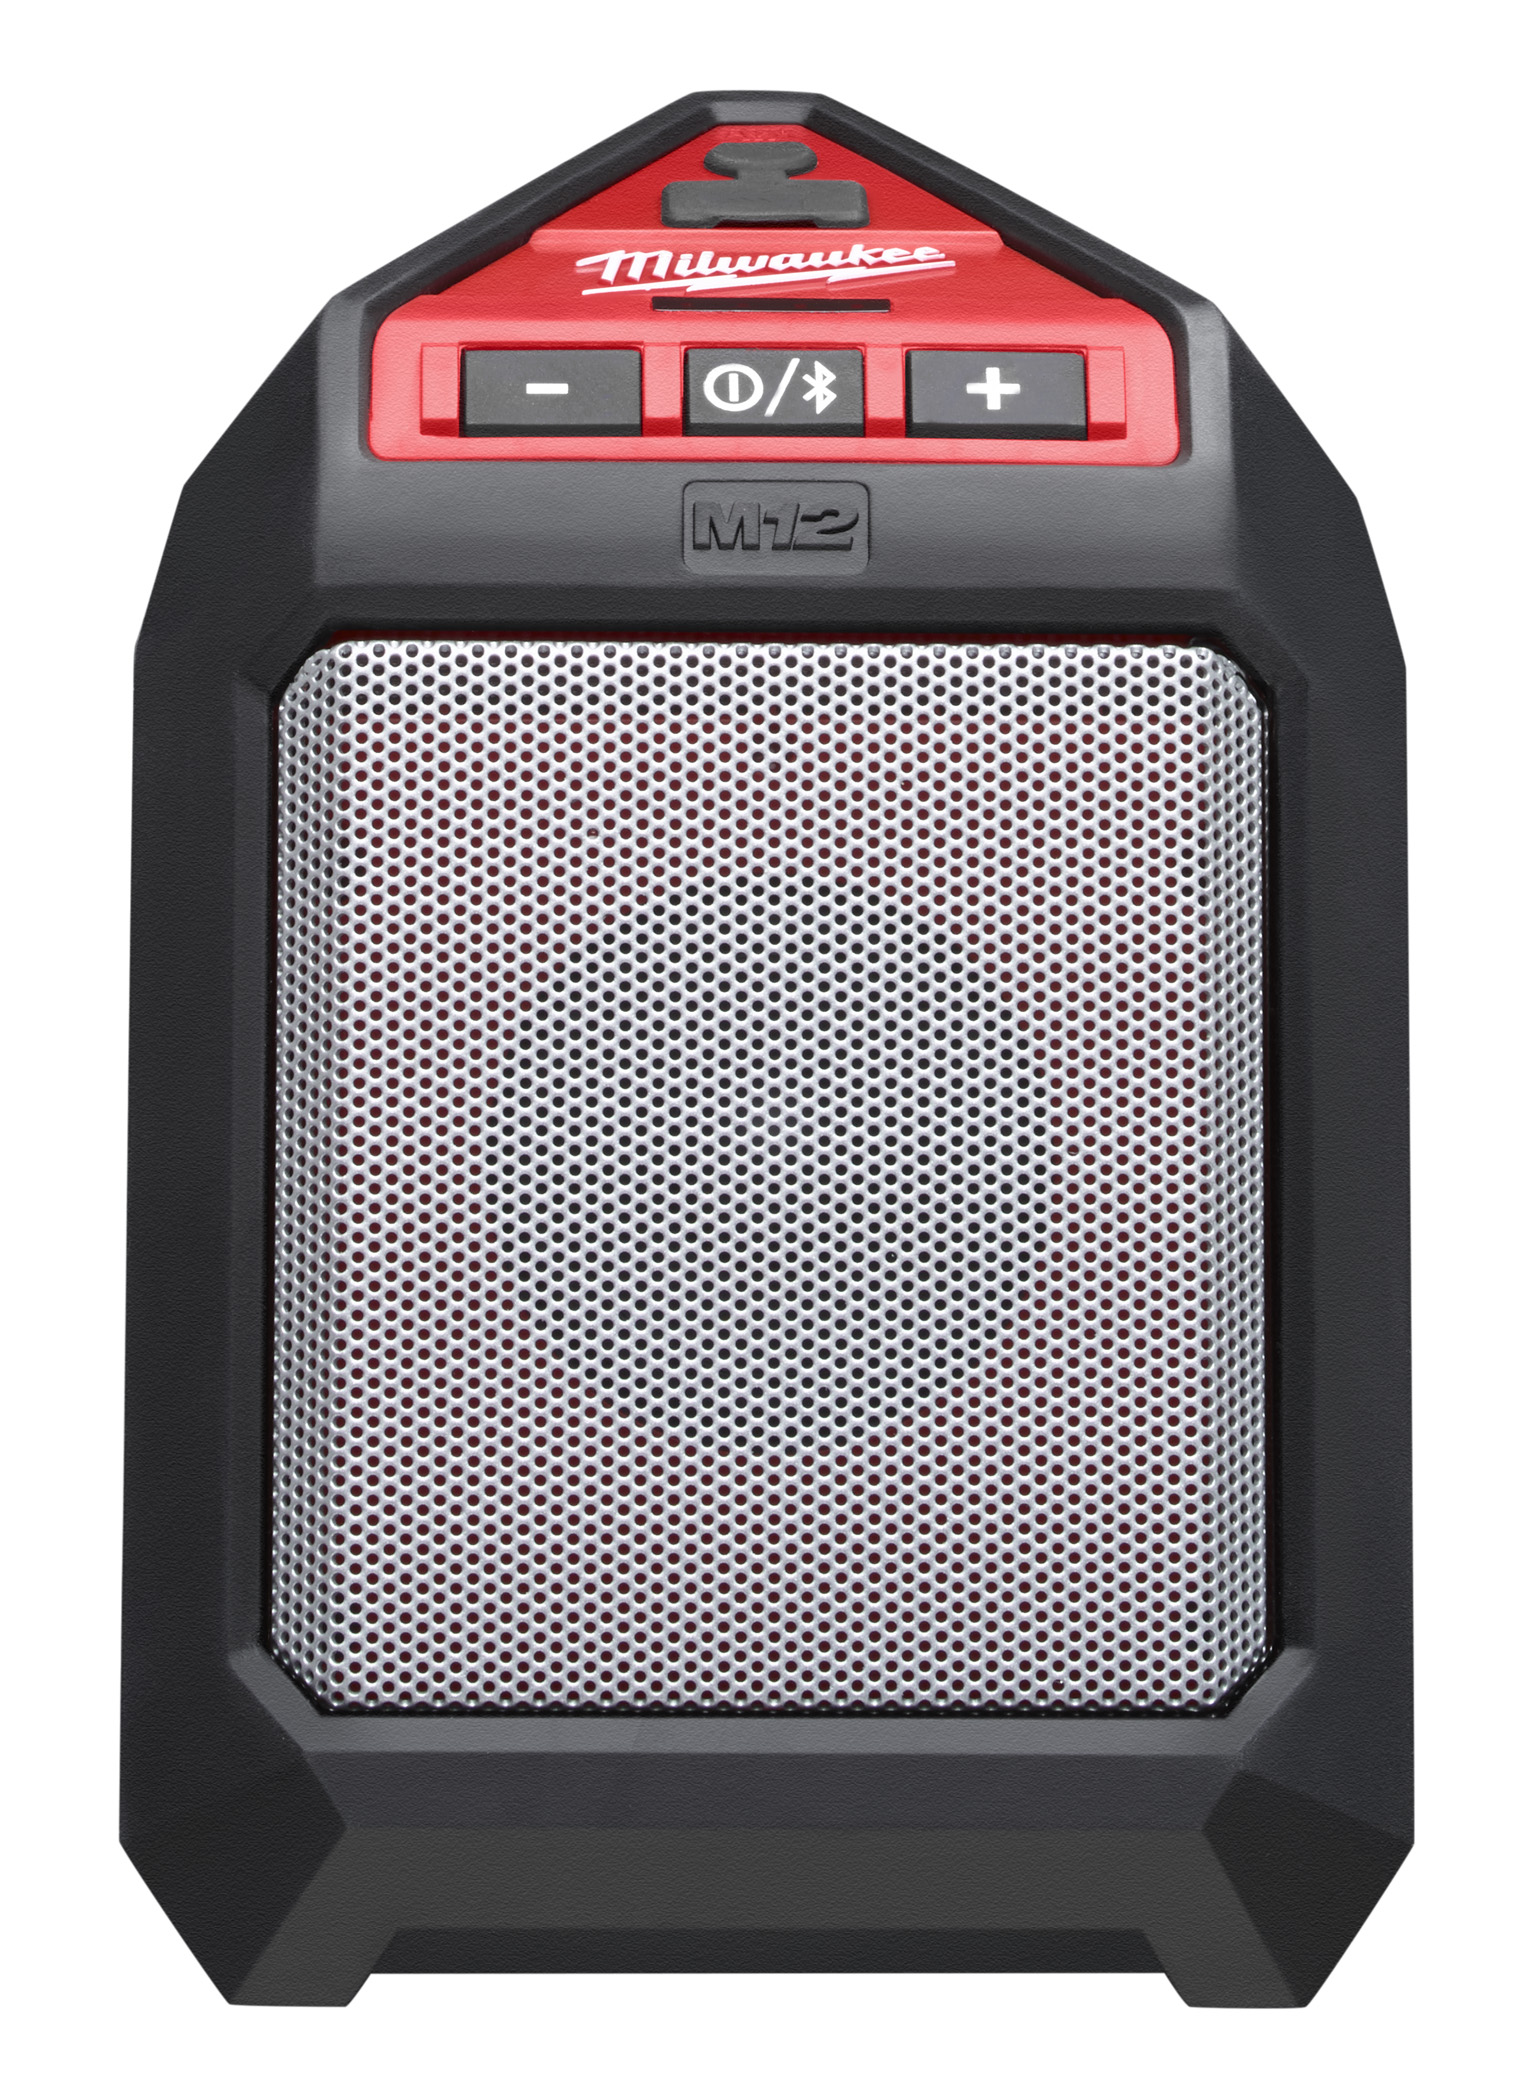 M12 12 Volt Lithium-Ion Cordless Wireless Jobsite Speaker